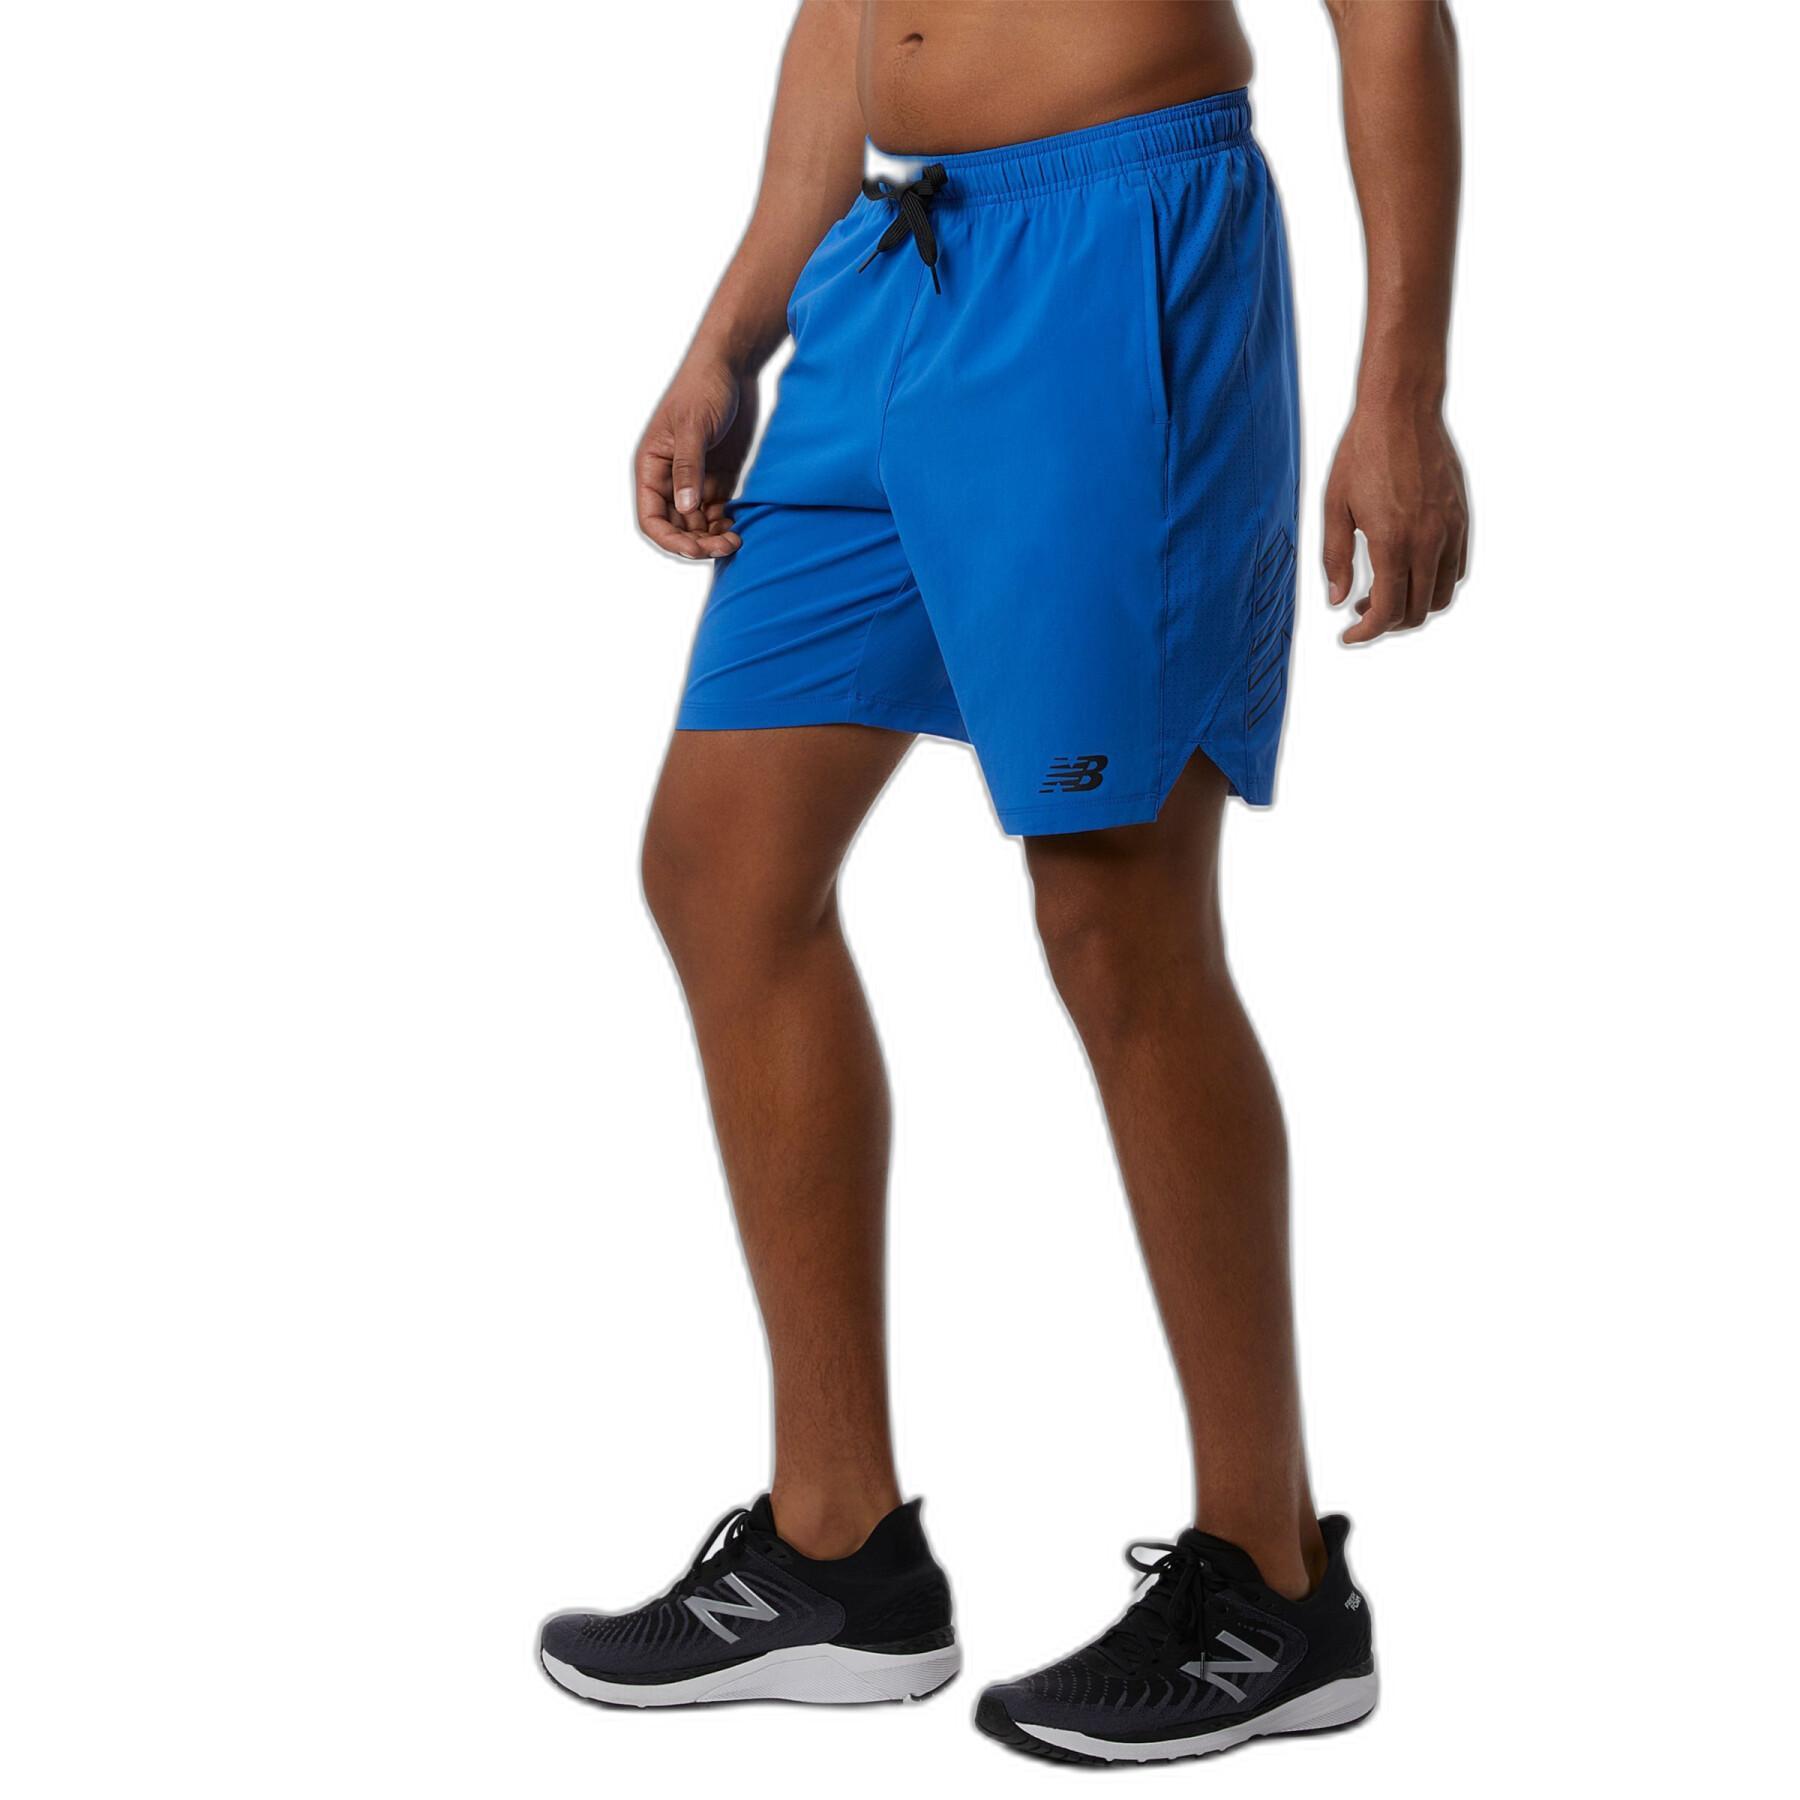 Pantalones cortos tejidos con logotipo New Balance Tenacity 9 "